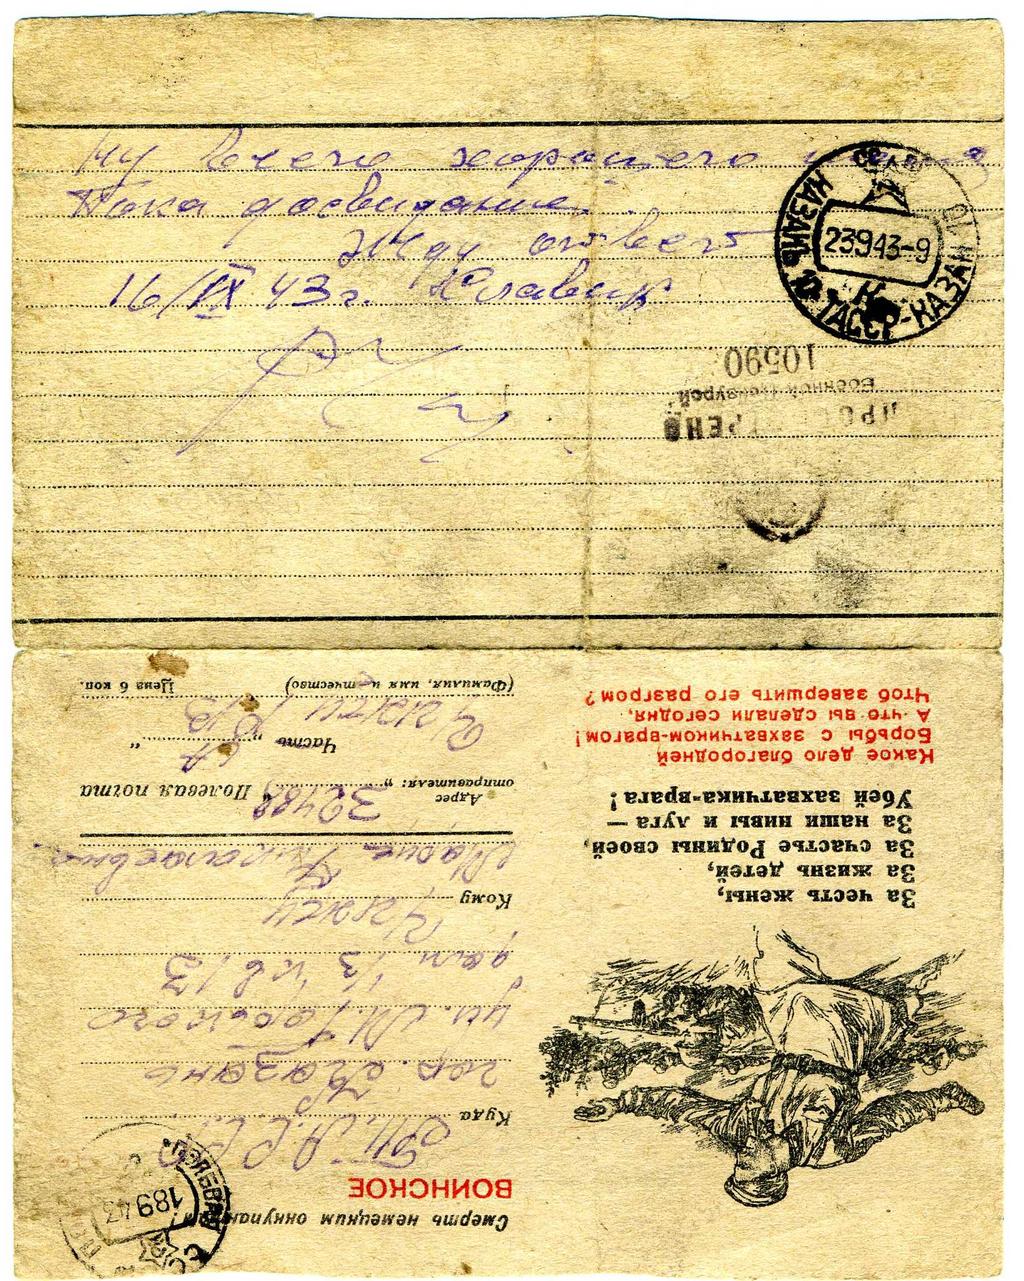 Фото №89790. Письмо на бланке Чижу М.Н. сентябрь,1943